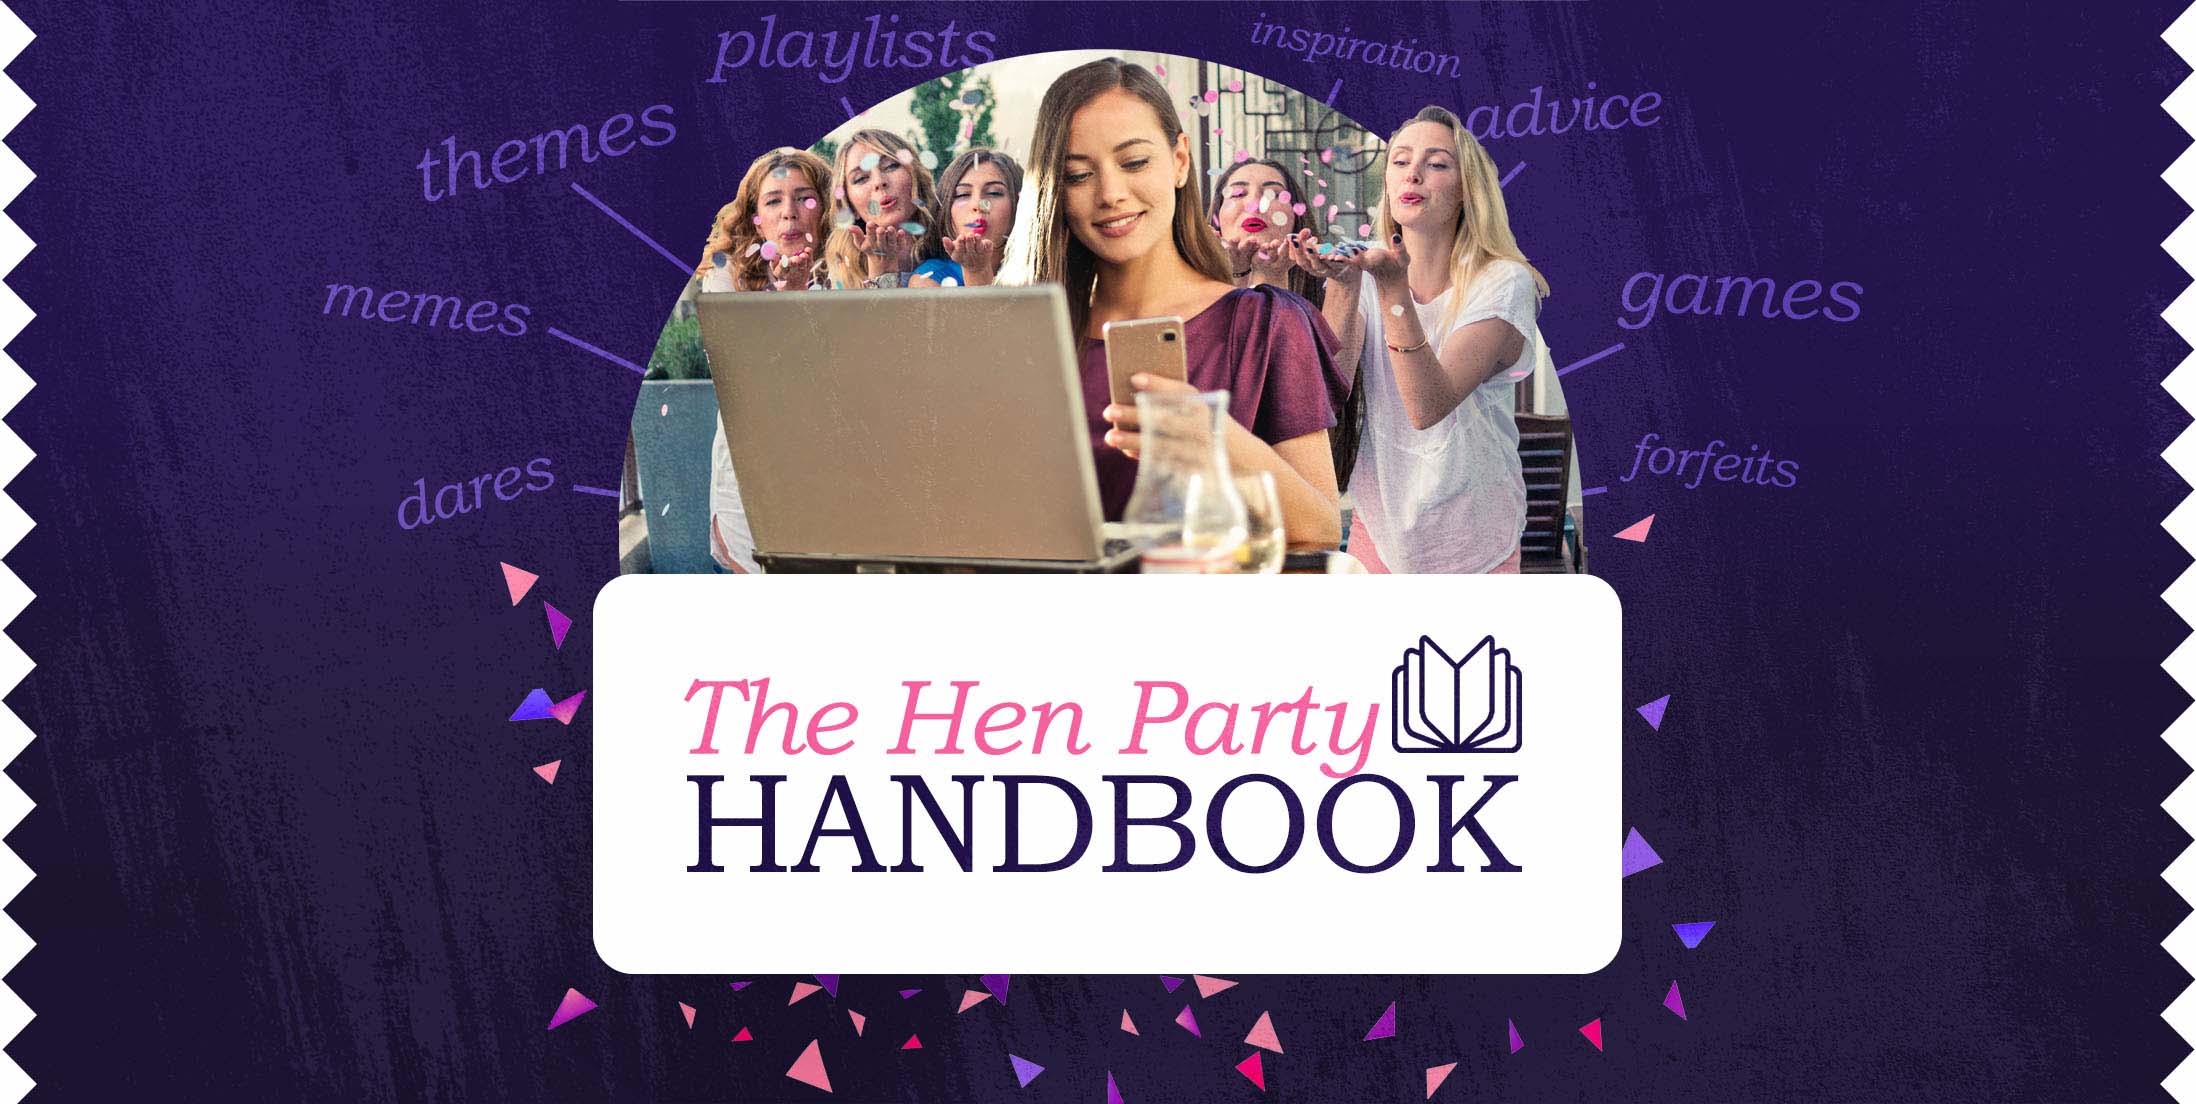 The Hen Party Handbook